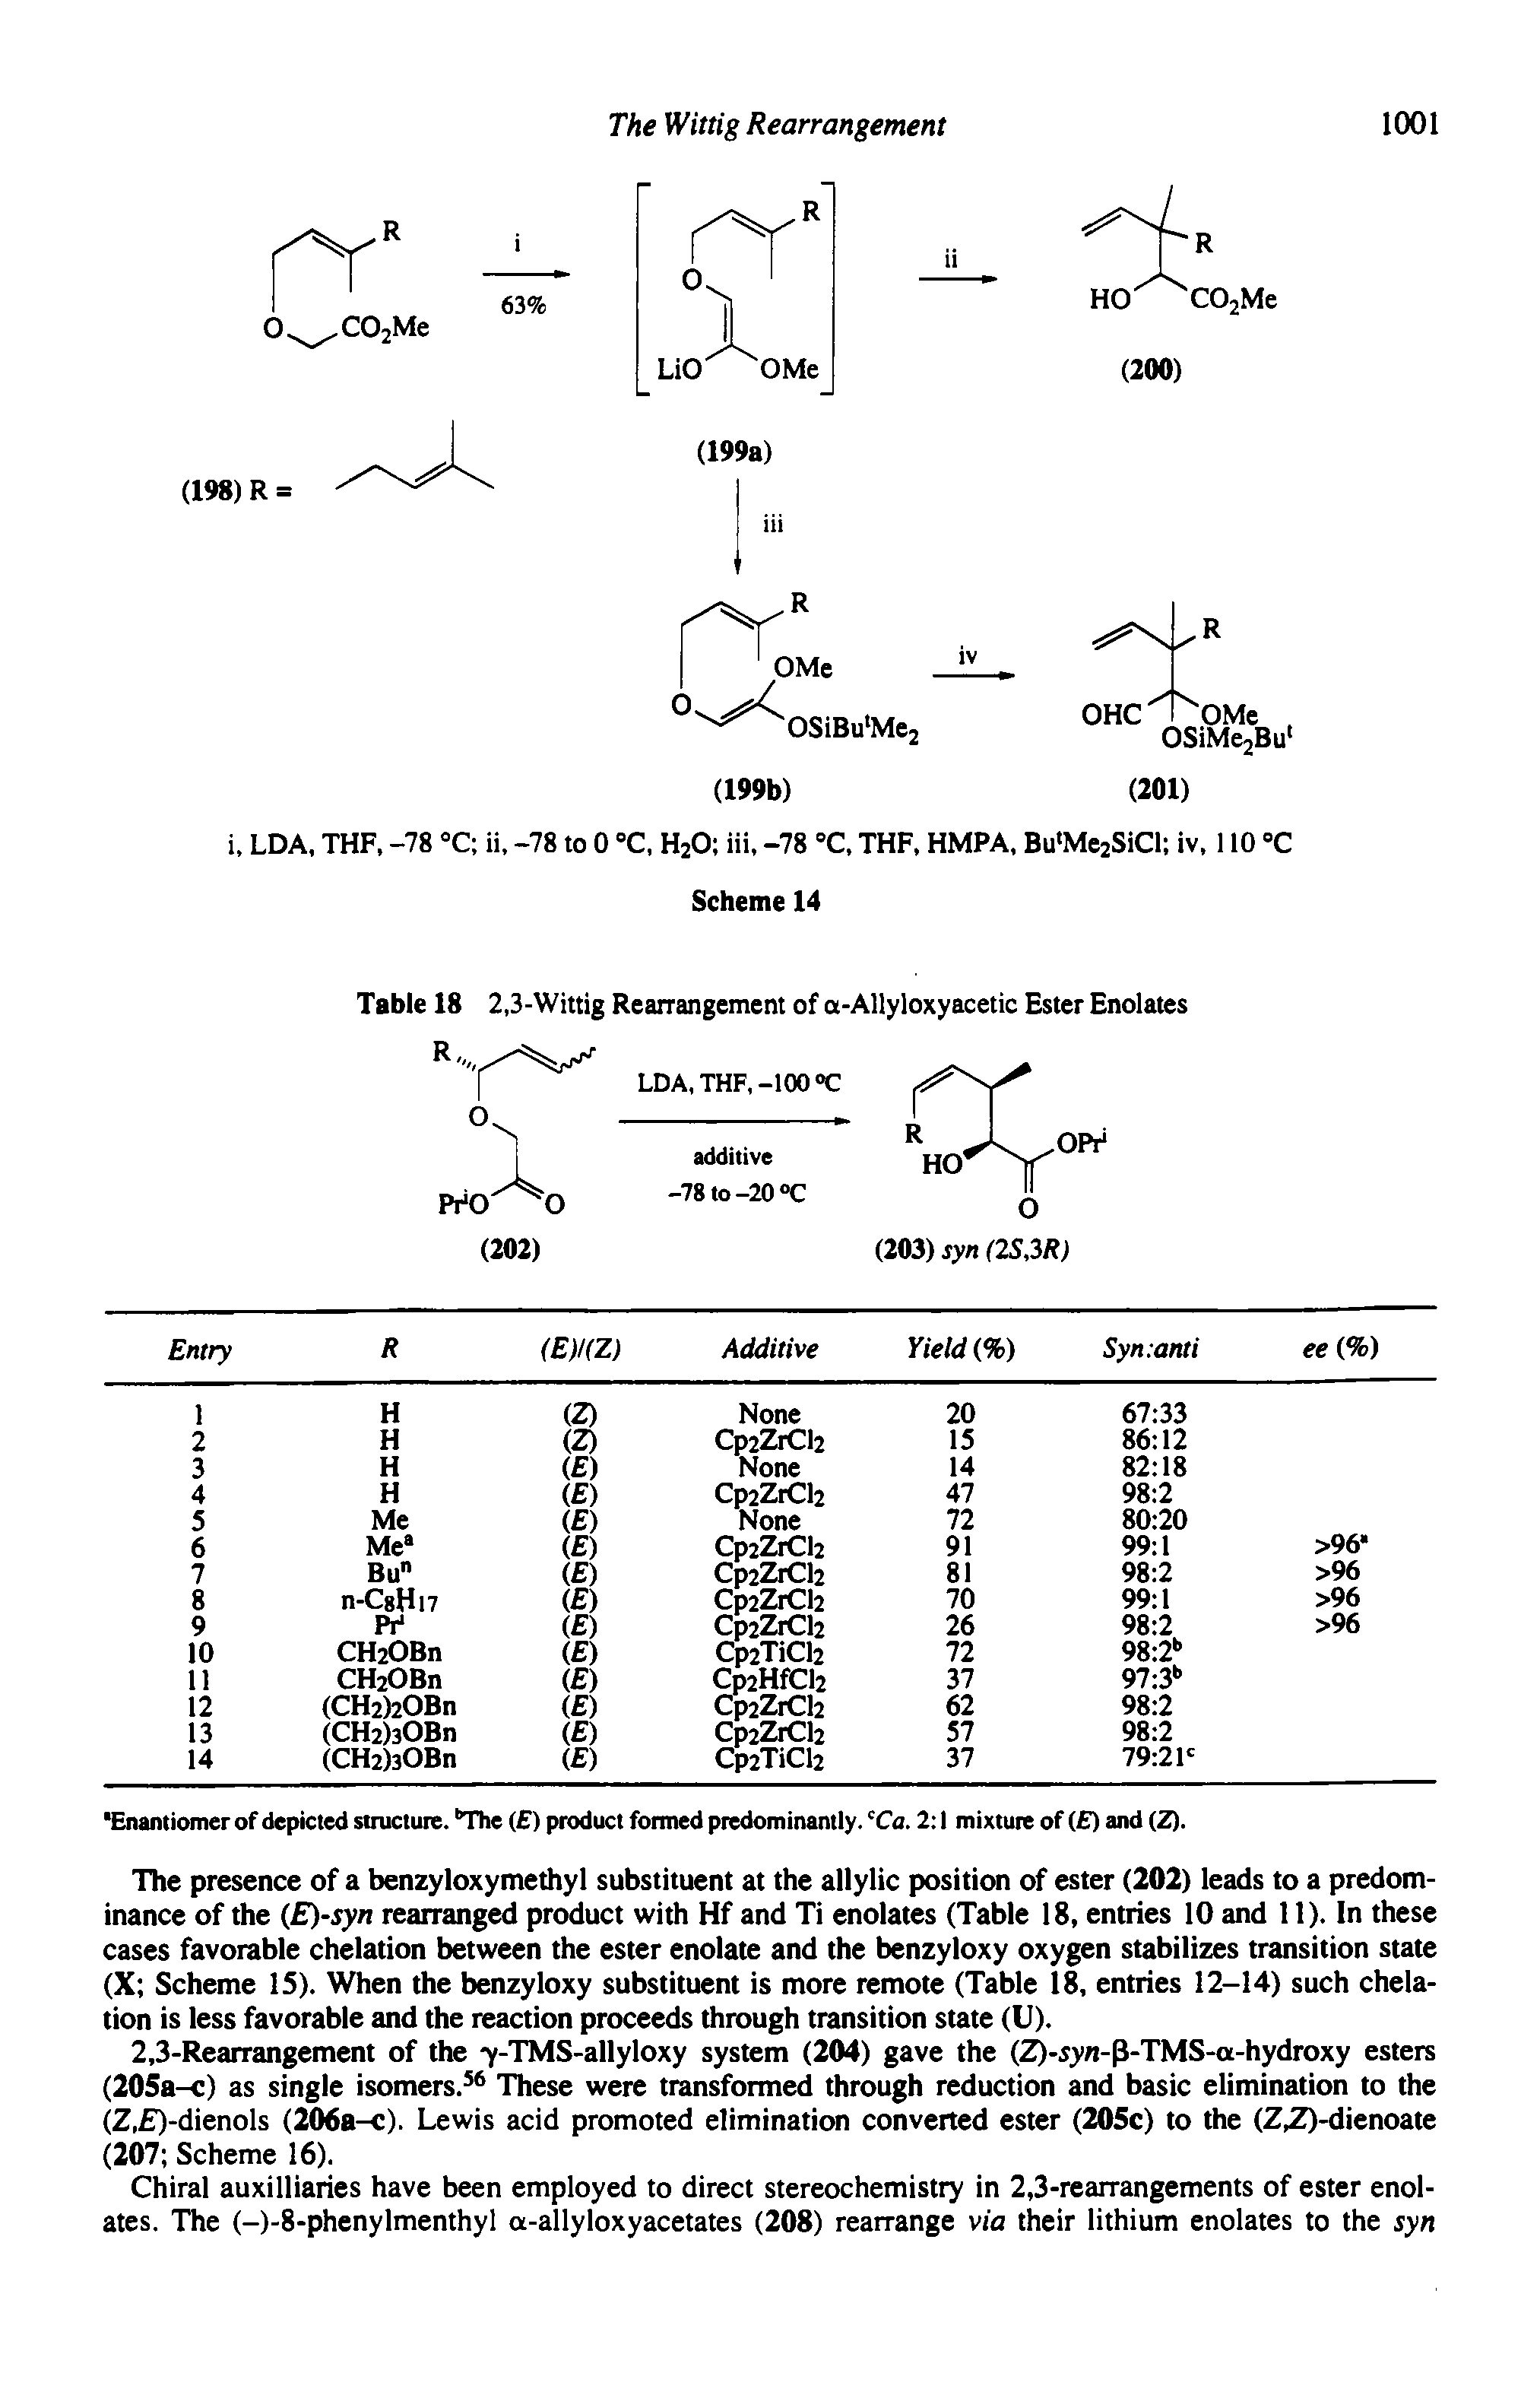 Table 18 2,3-Wittig Rearrangement of o-Allyloxyacetic Ester Enolates LDA, THF,-100 C...